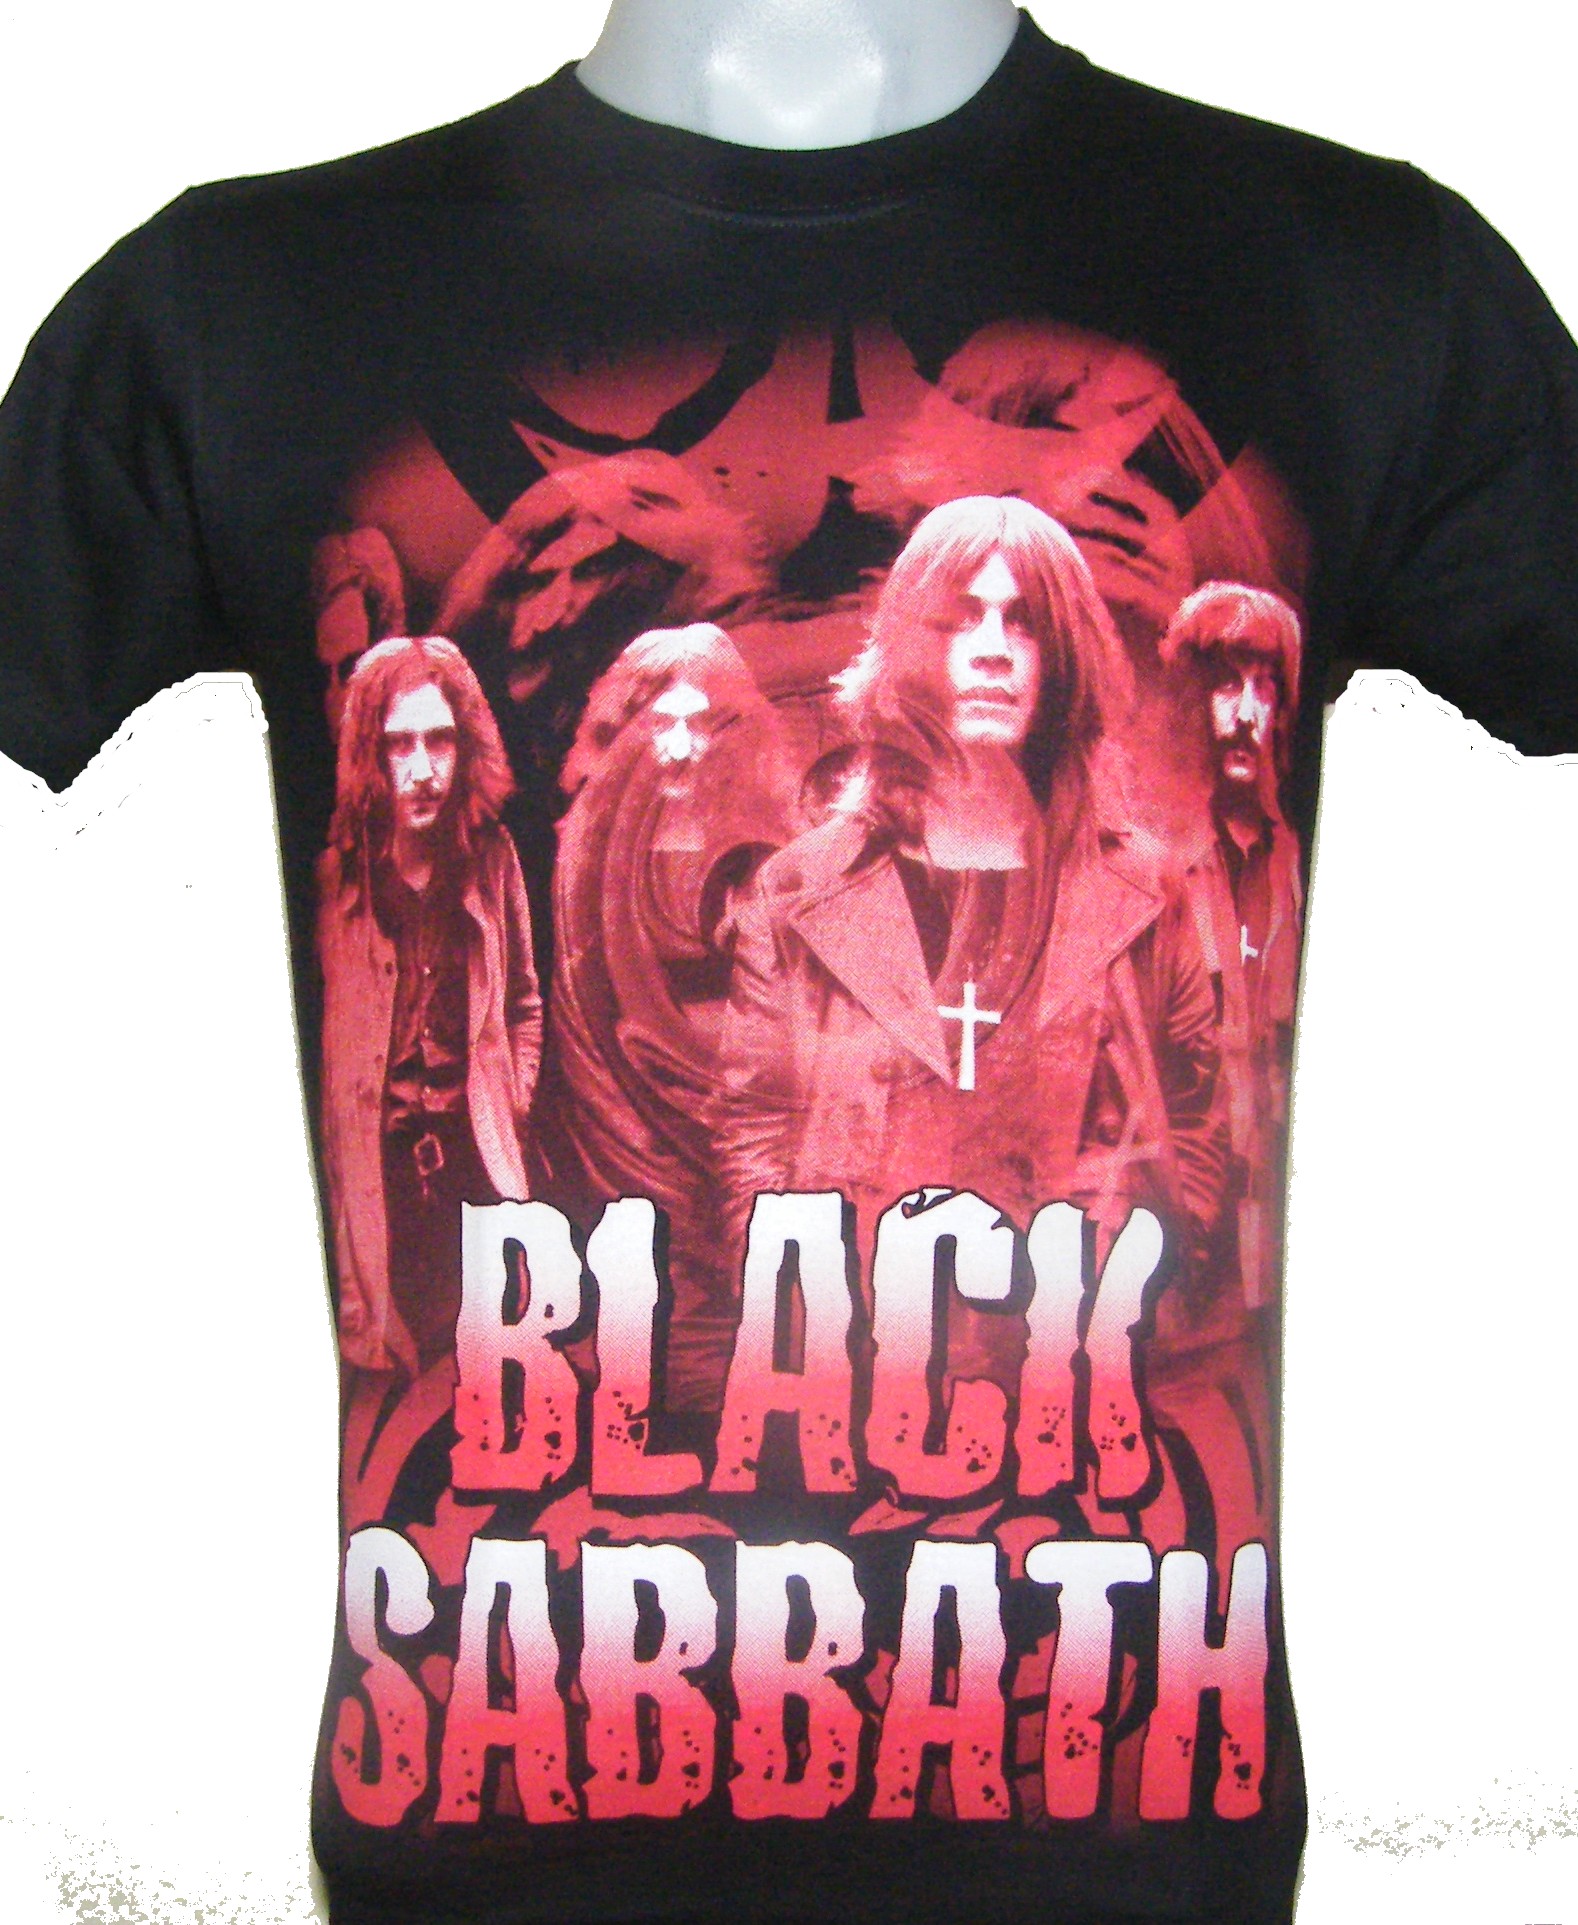 Black Sabbath t-shirt size S – RoxxBKK